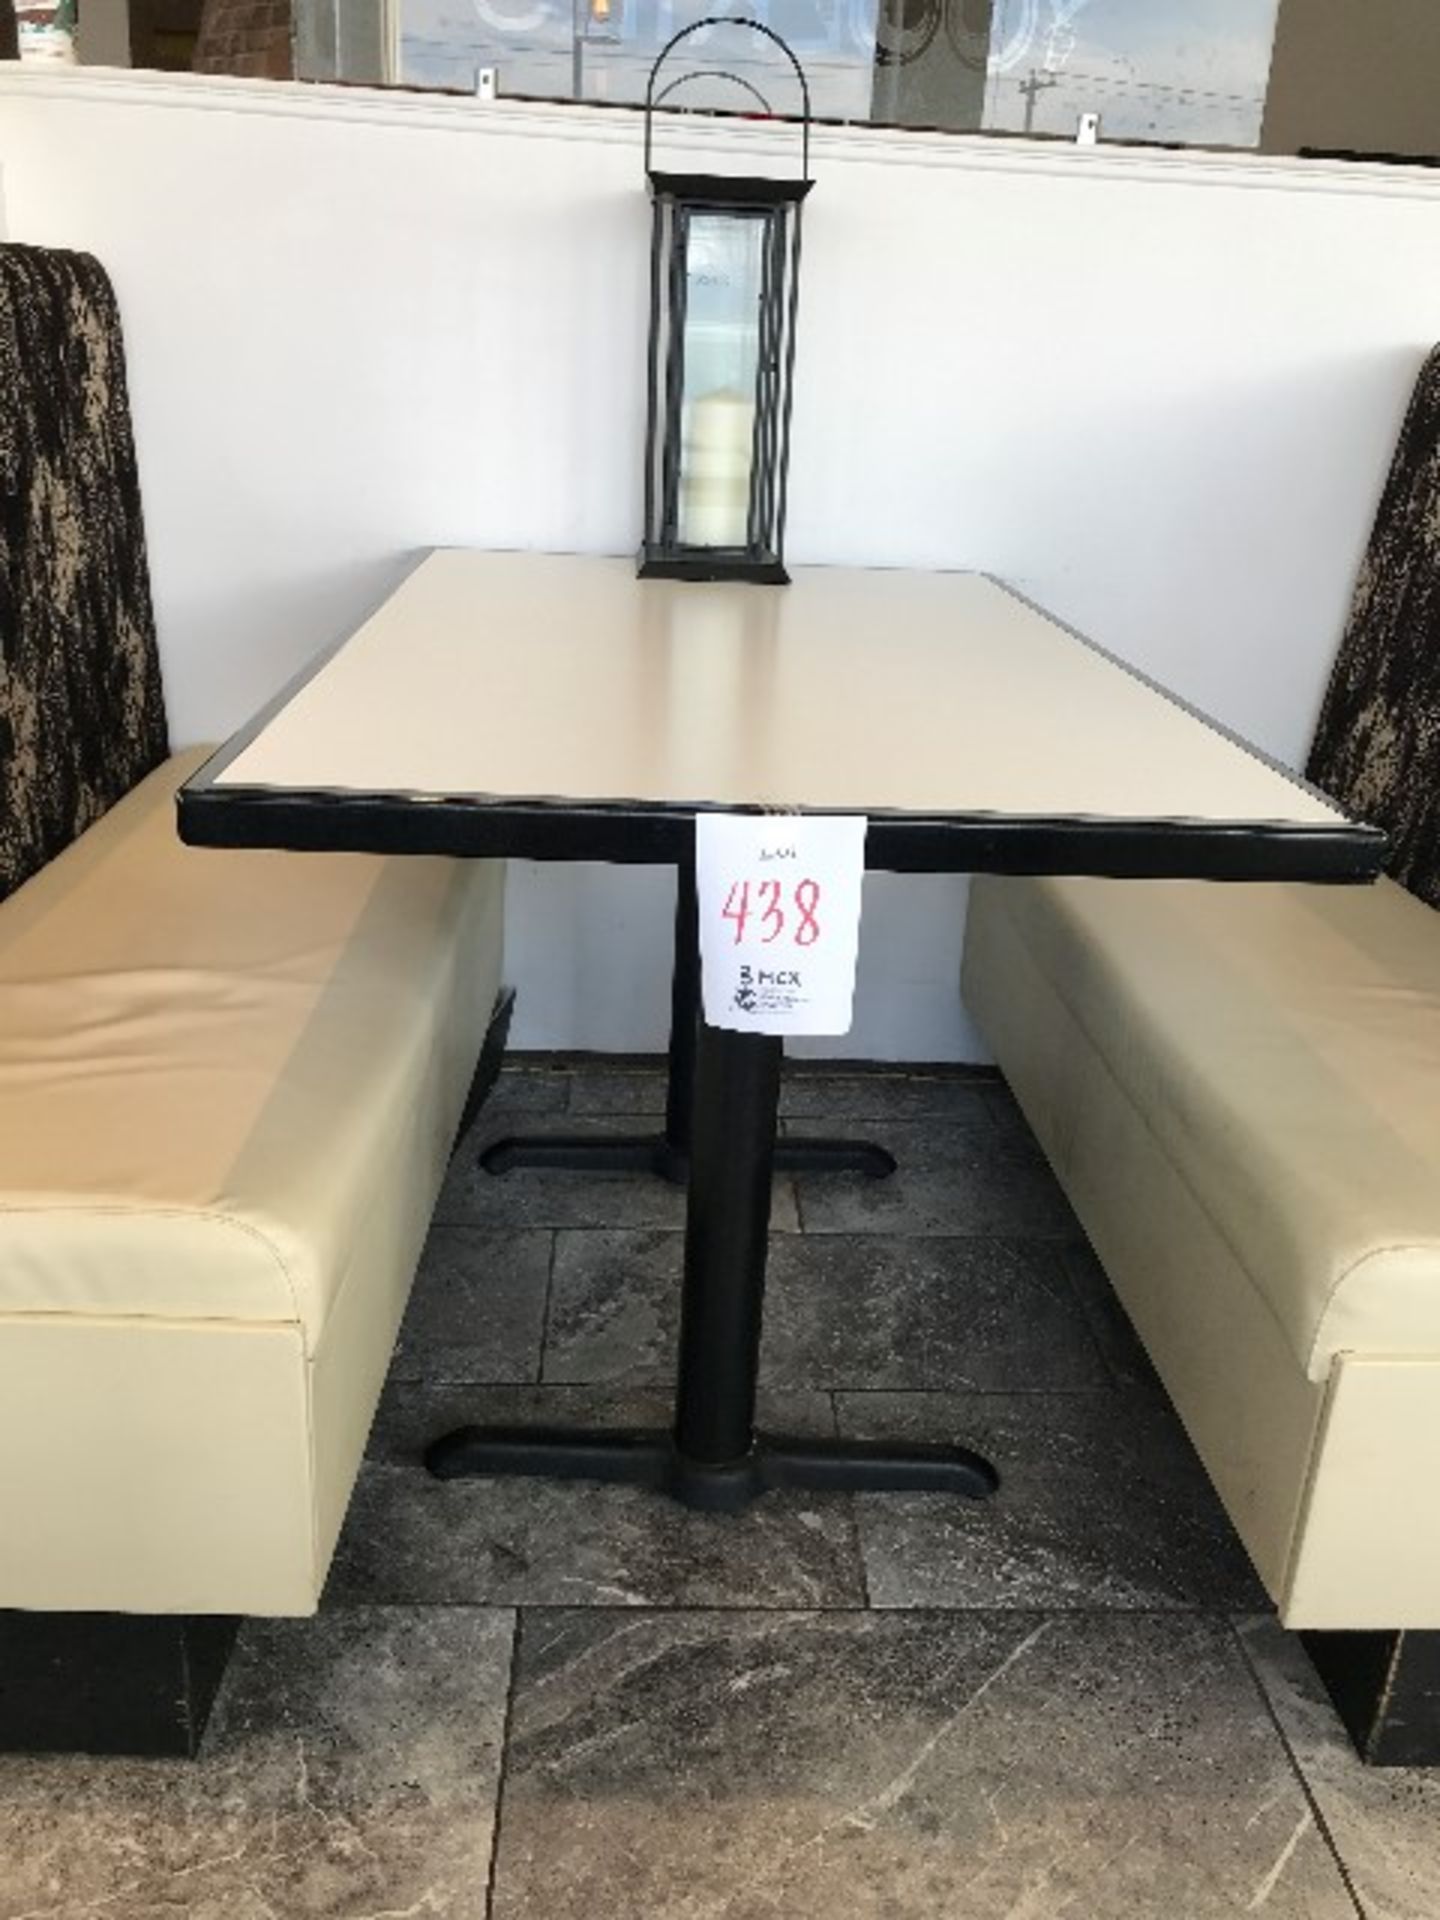 Table,48”x30”,double pedestal base,3pcs